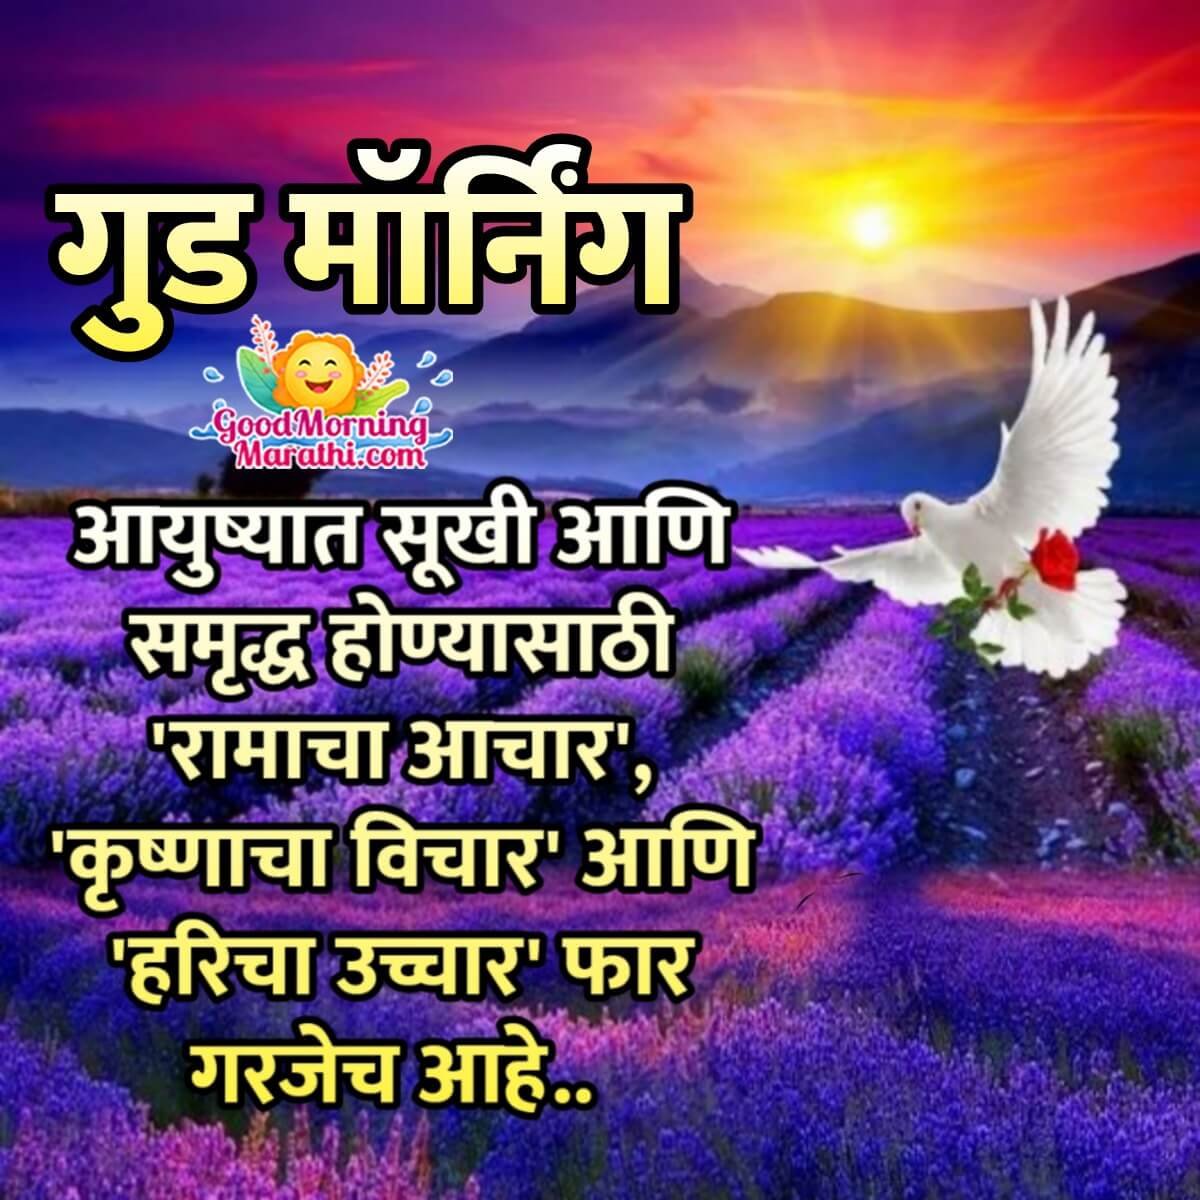 Good Morning Marathi Quotes Images - Good Morning Wishes & Images ...